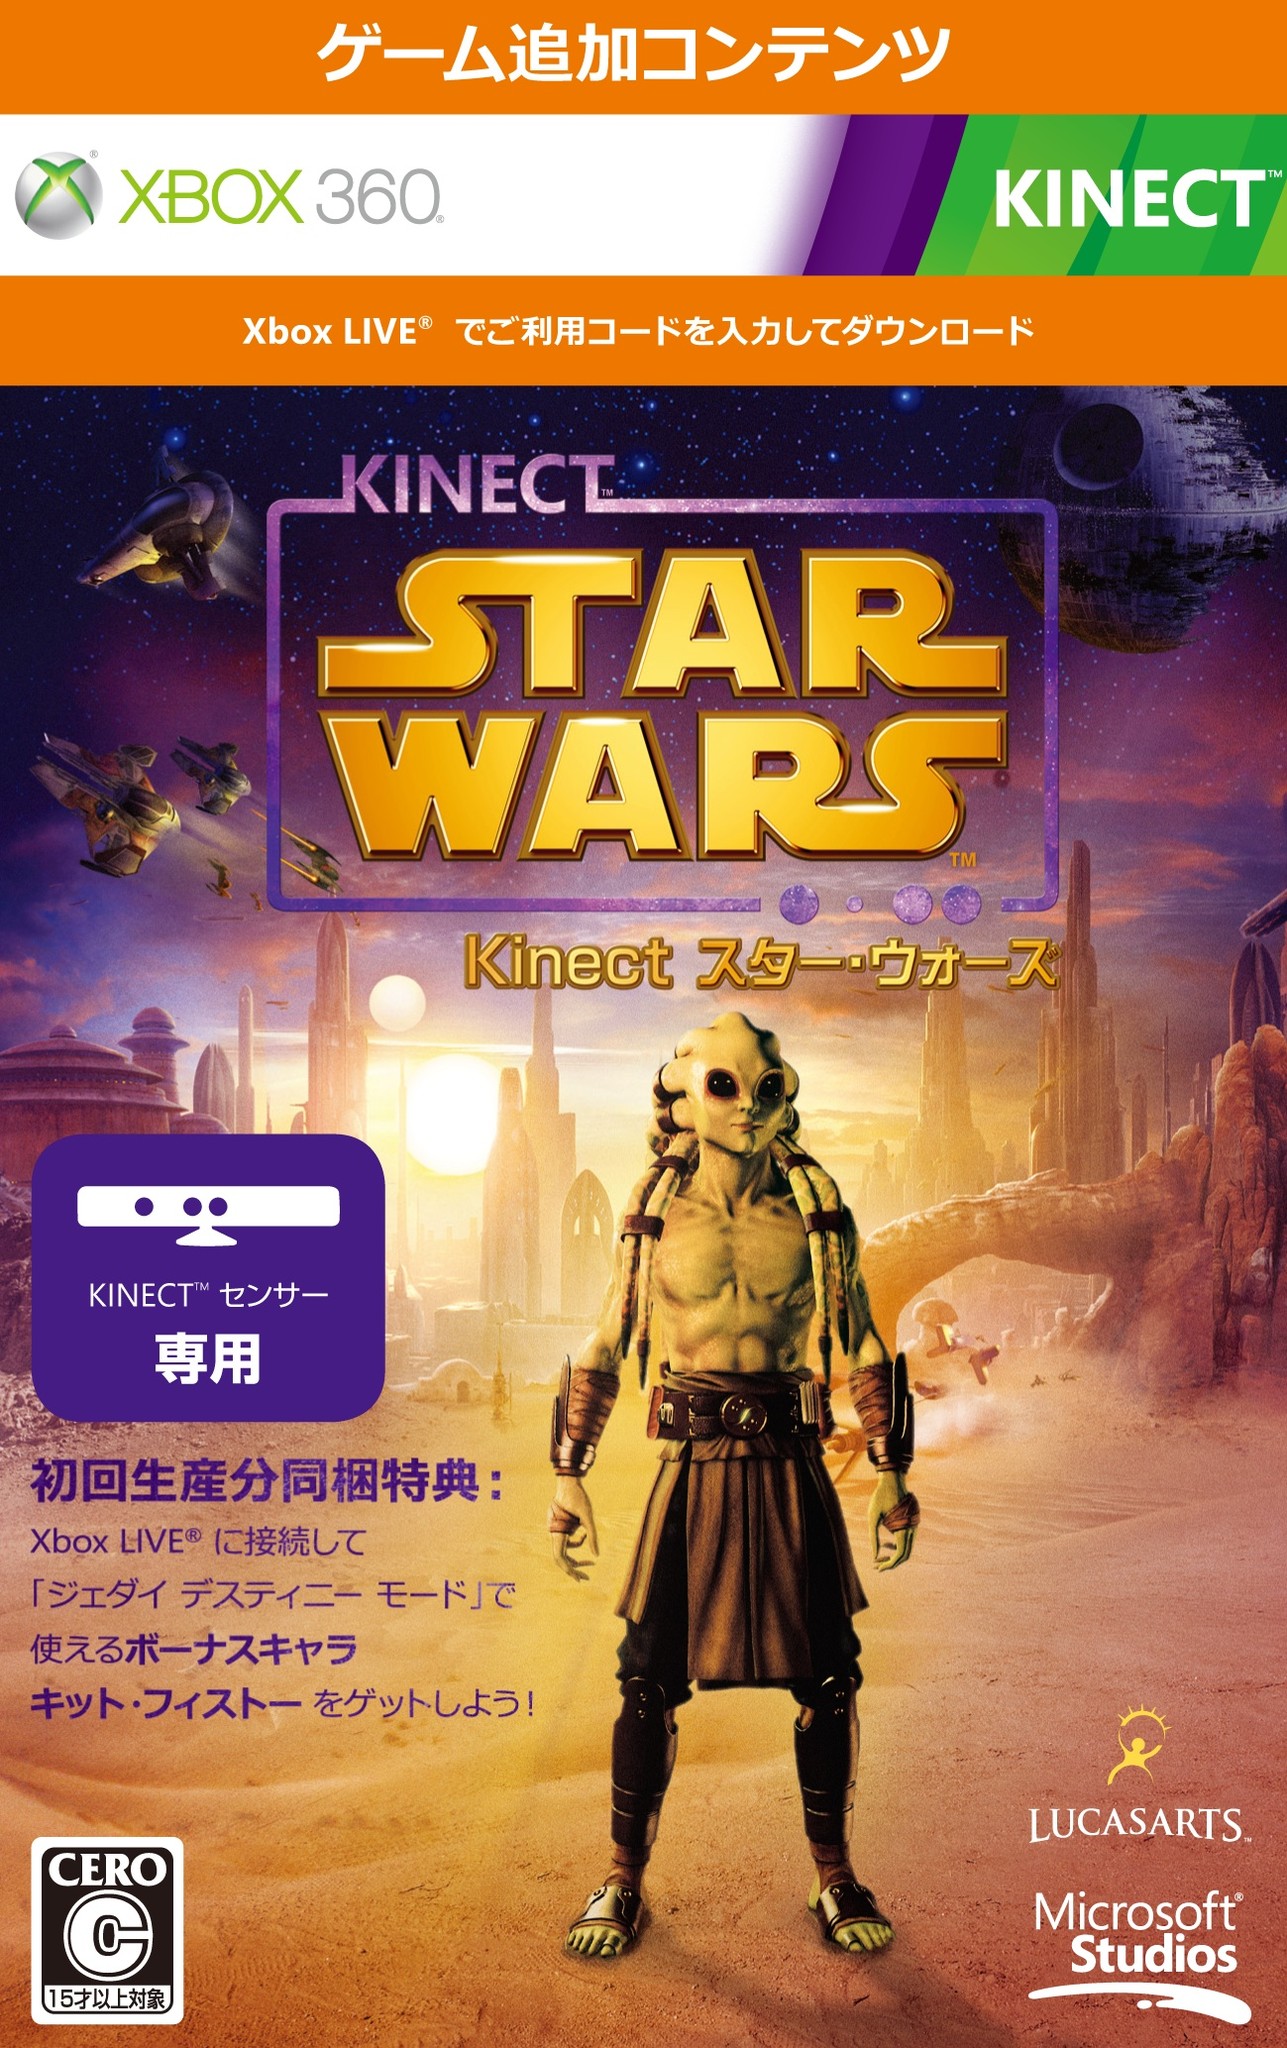 Kinect スター・ウォーズ - Xbox360 g6bh9ry